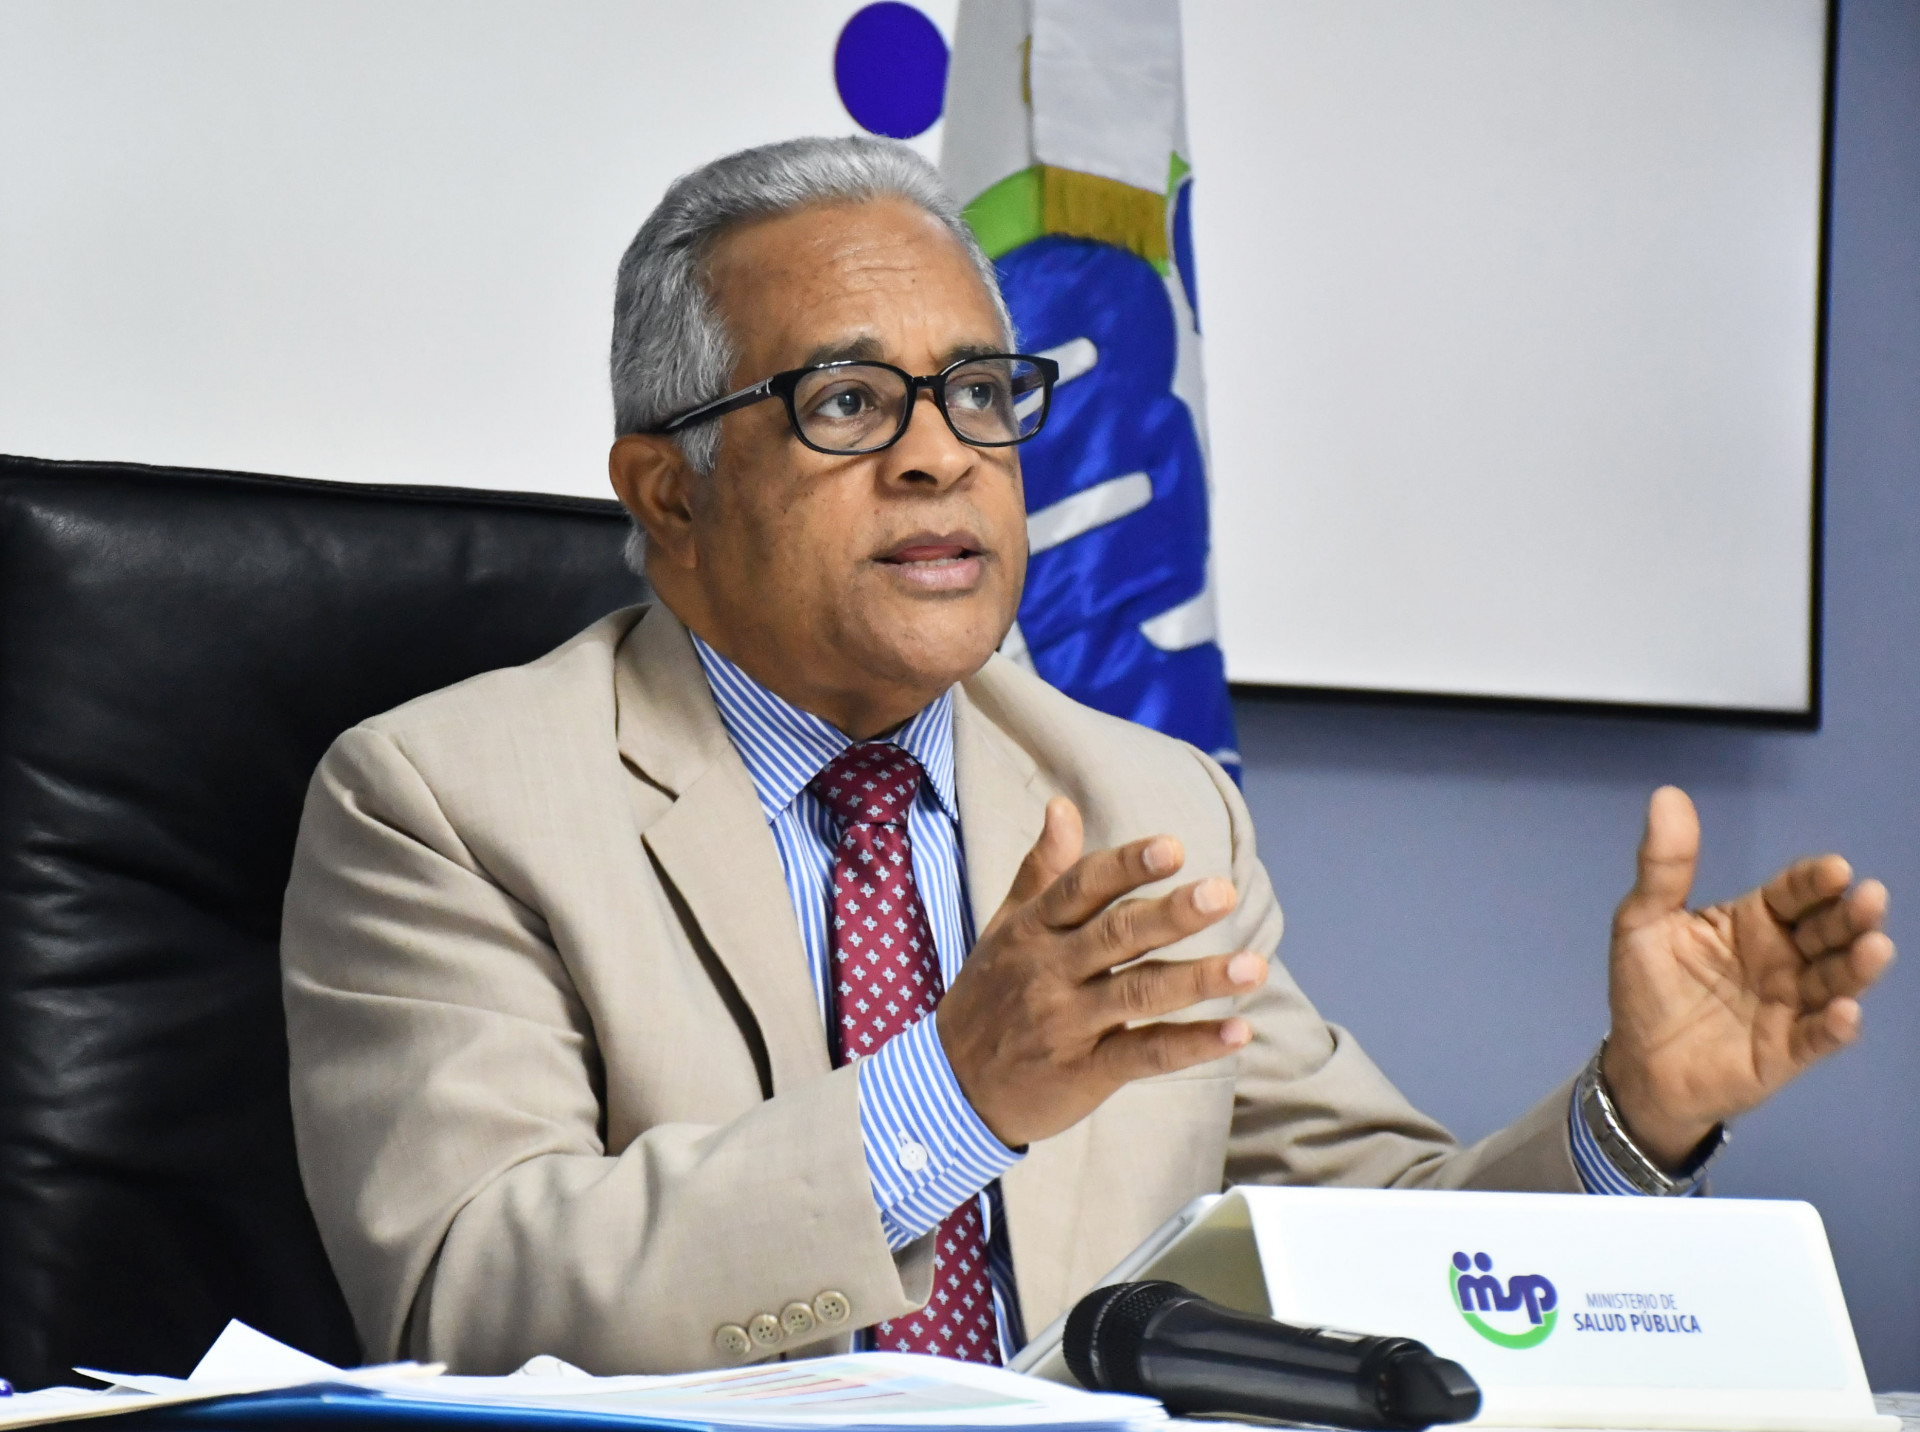 REPÚBLICA DOMINICANA: Ministerio de Salud declara epidémico territorio nacional para controlar propagación COVID-19